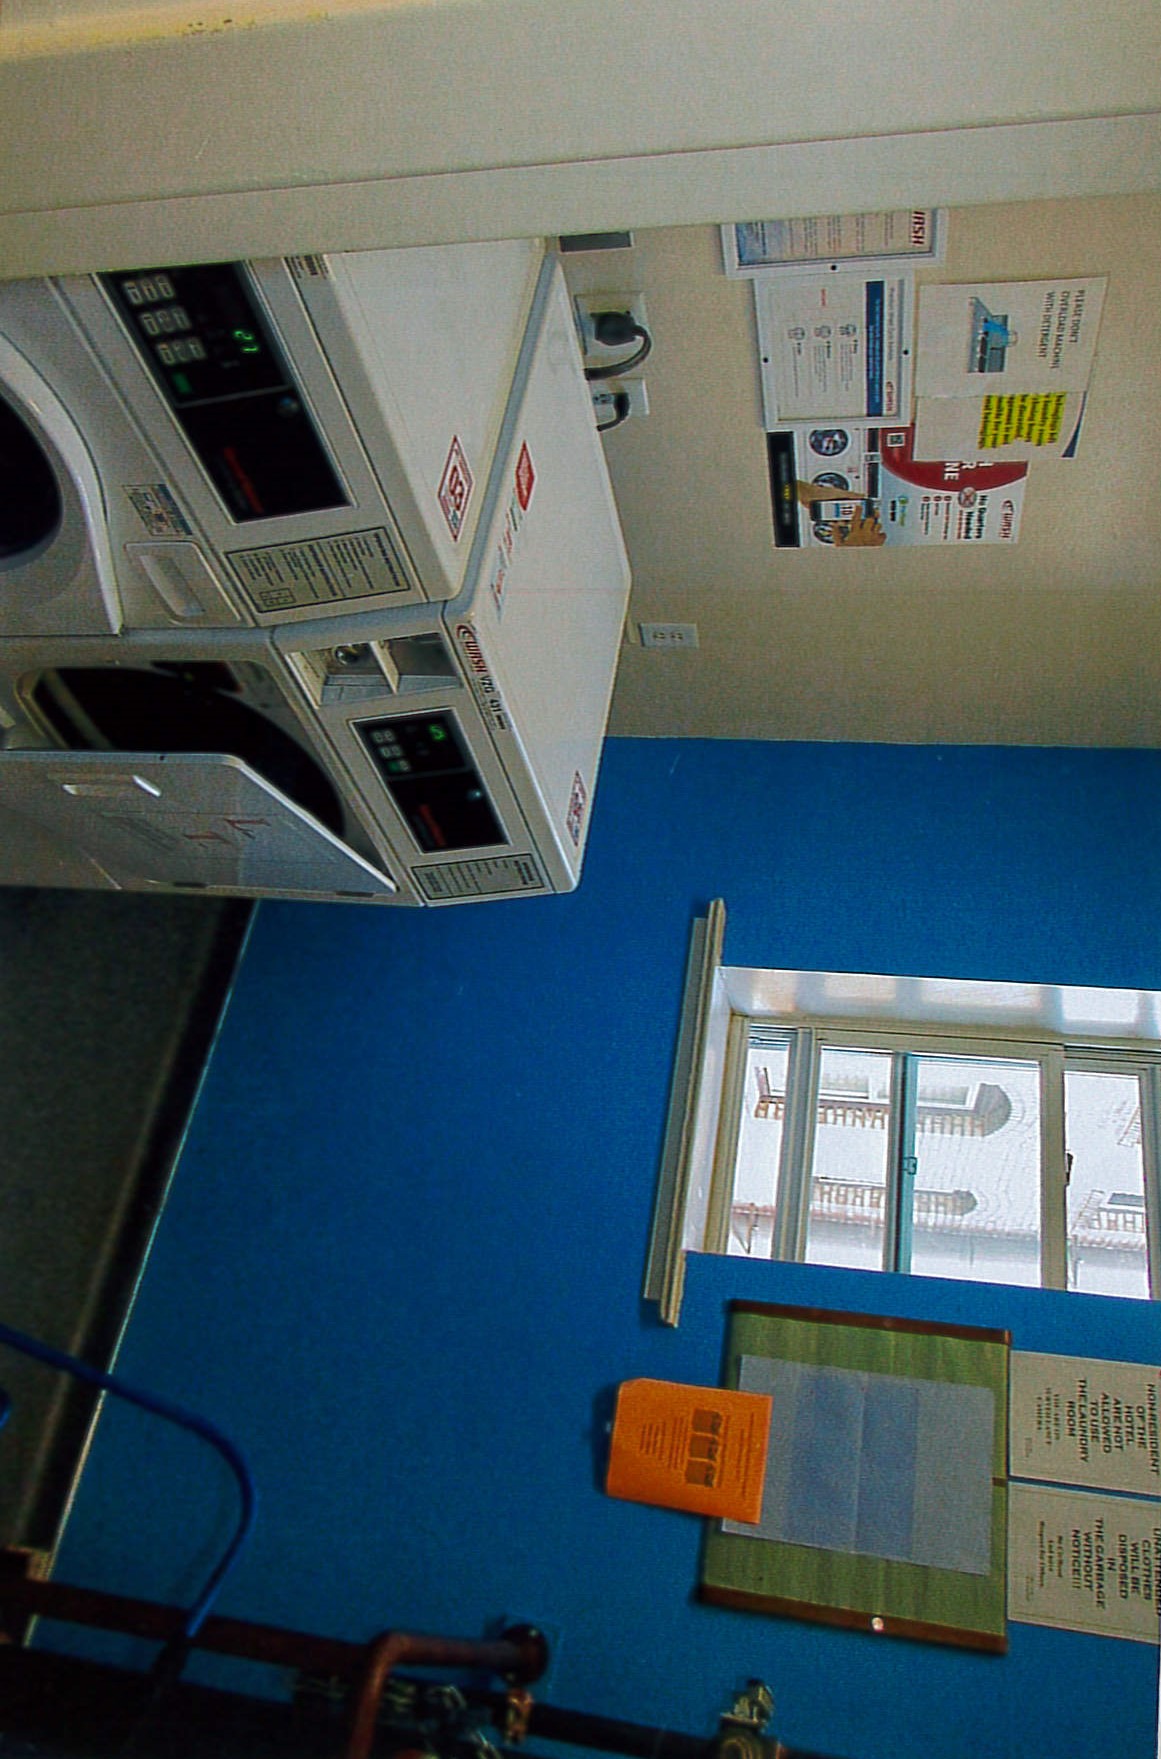 Fifth floor laundry room